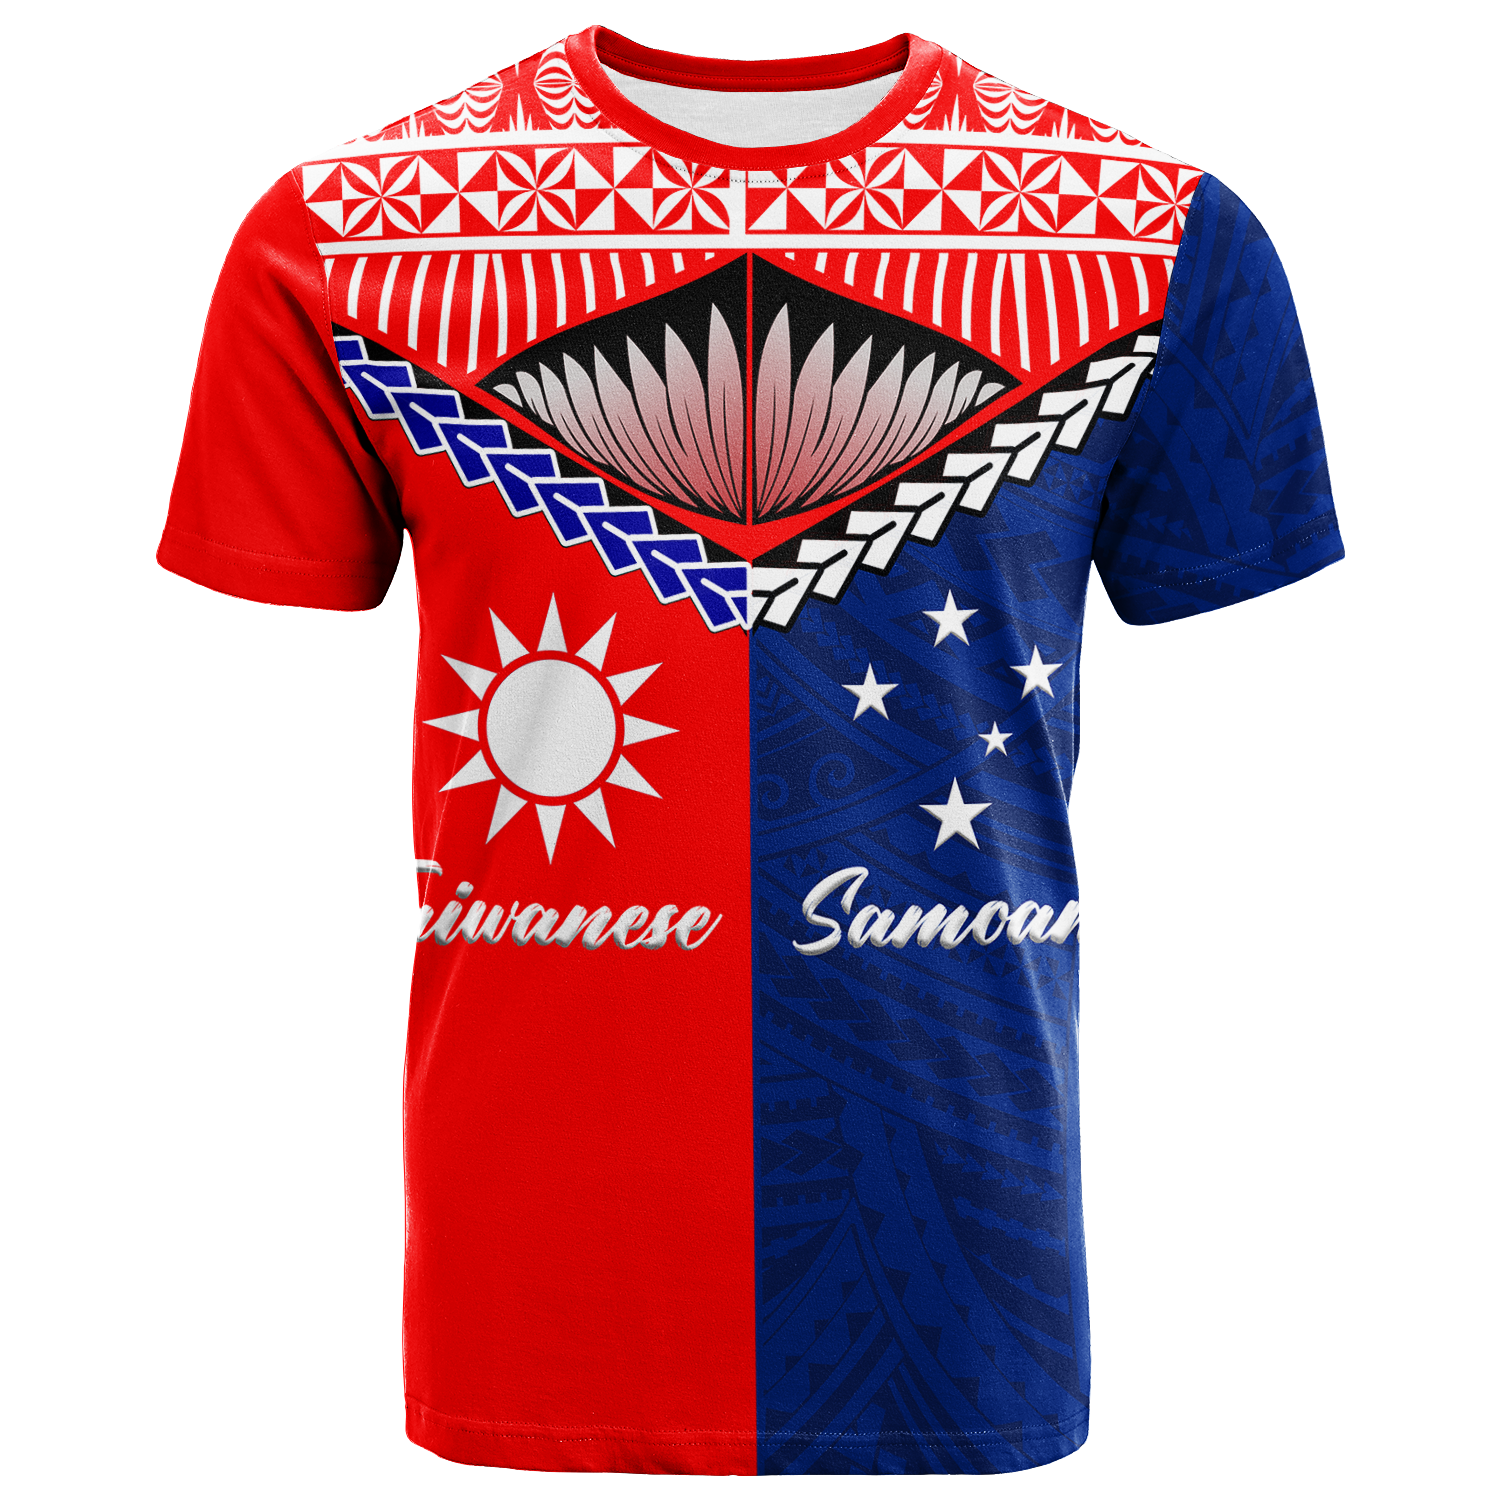 Taiwanese Combine Samoan Pride T Shirt LT12 Blue - Polynesian Pride